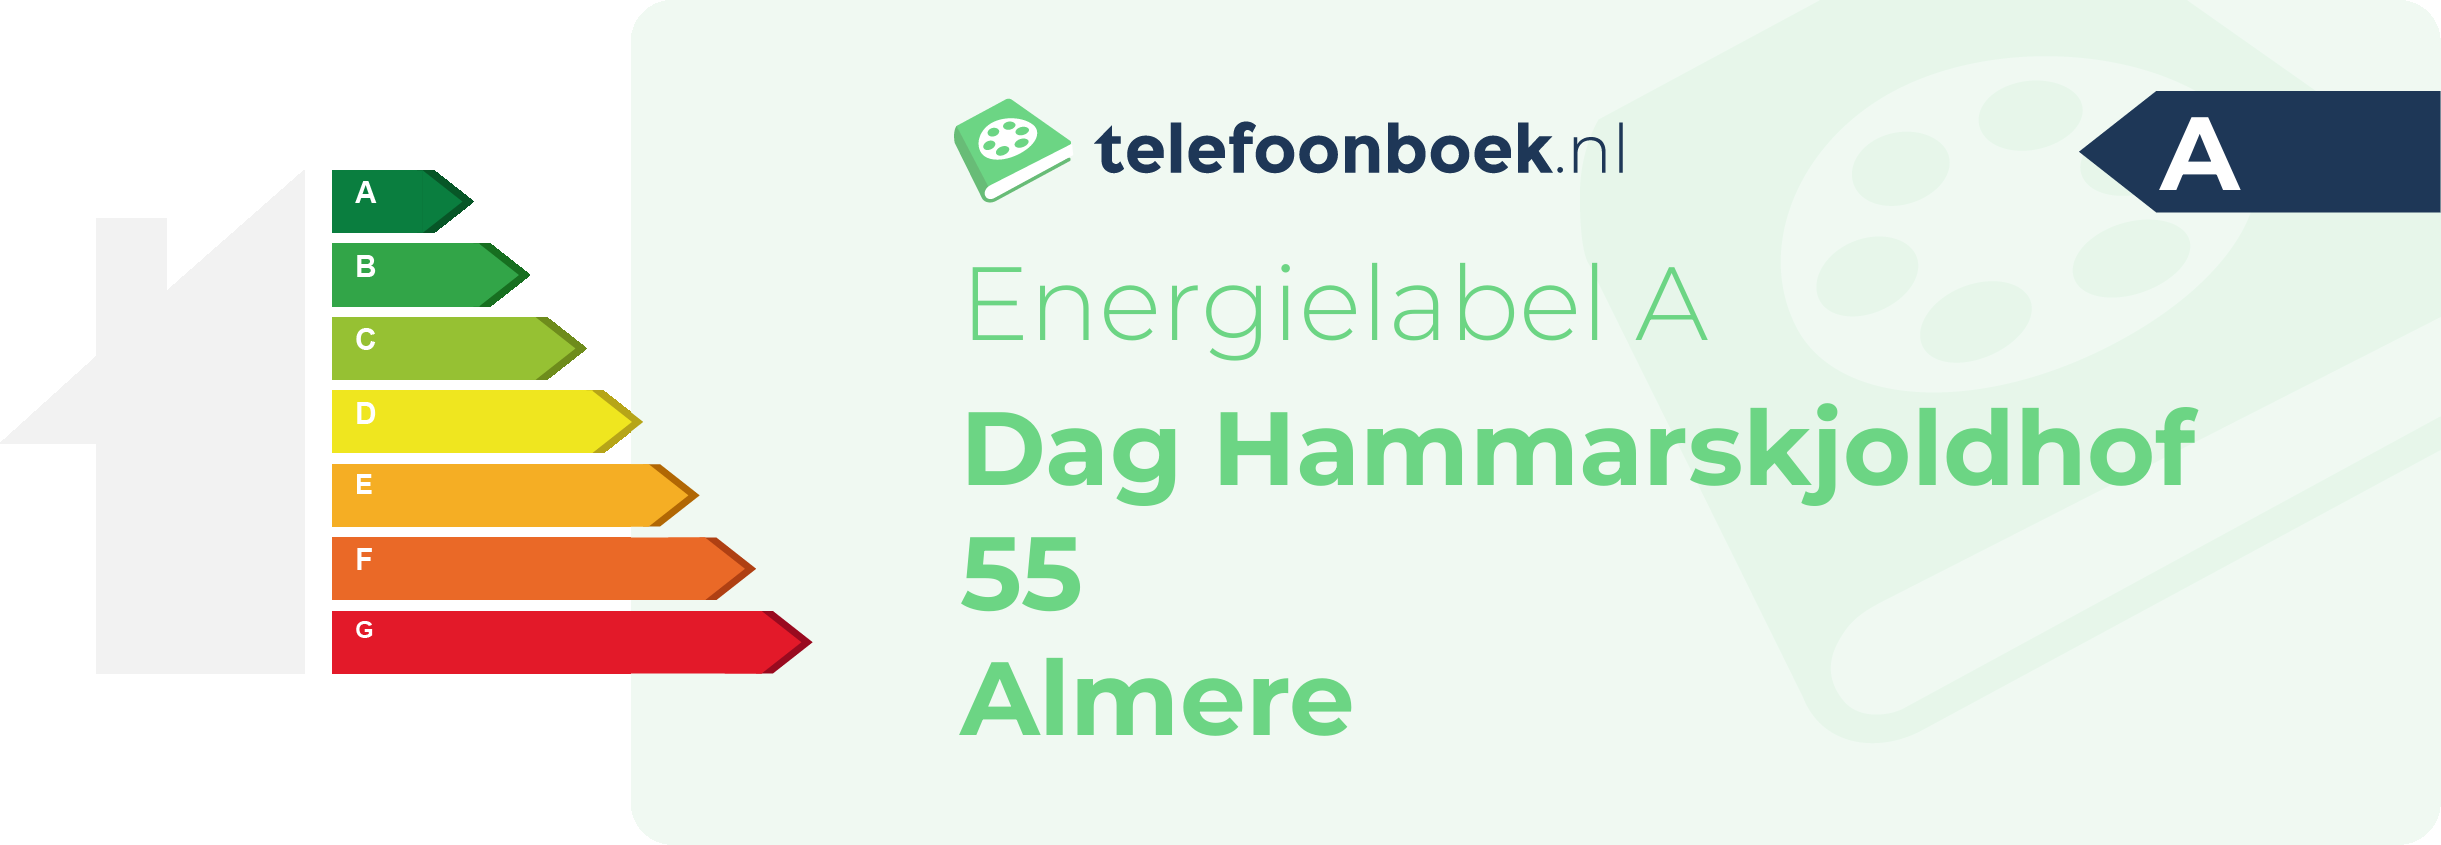 Energielabel Dag Hammarskjoldhof 55 Almere